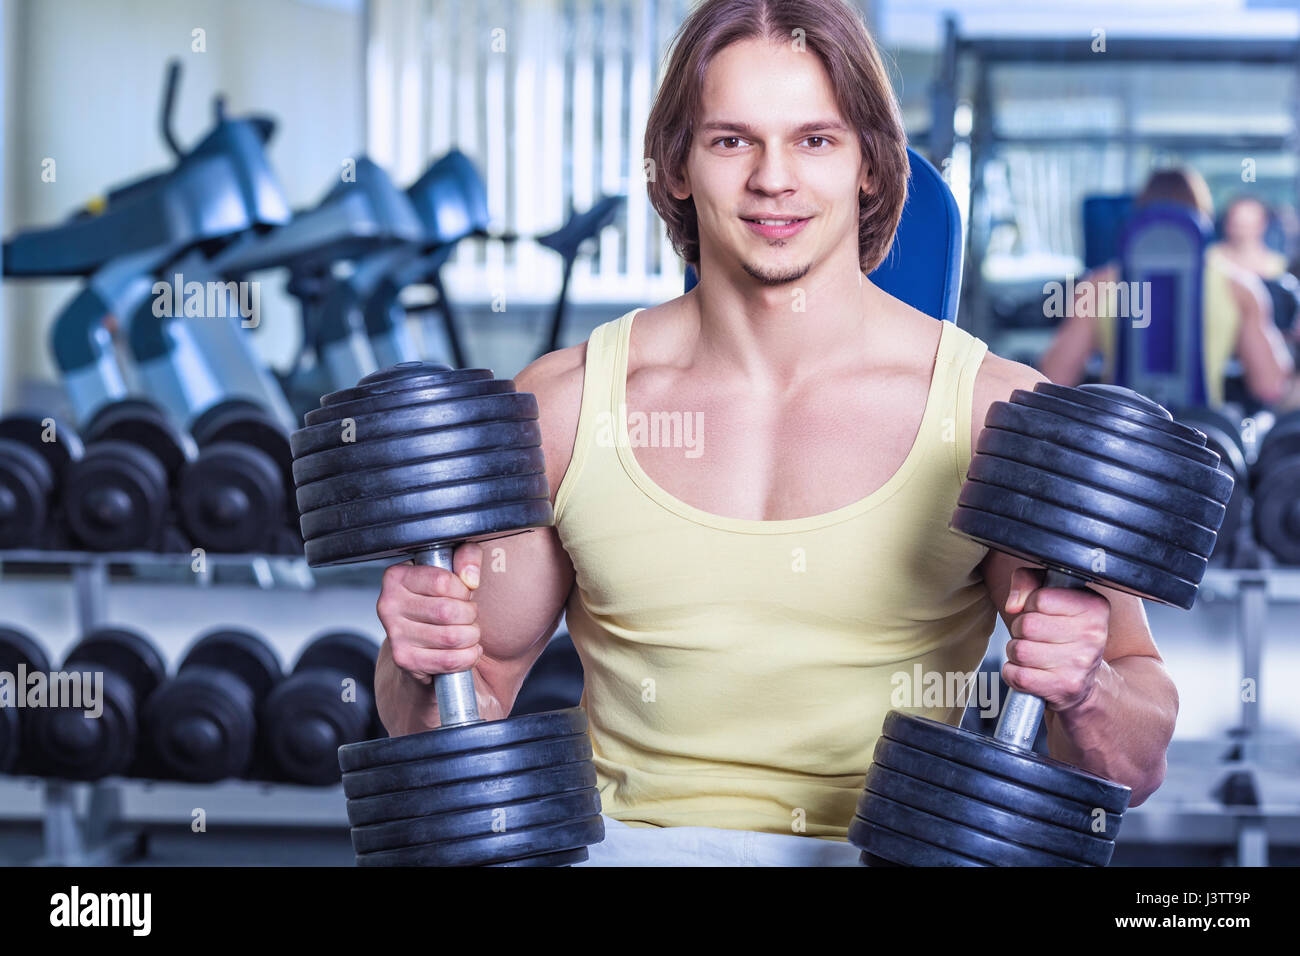 Menacingly. #workout #dumbell #lifting #progres #weightlifting #dumbel